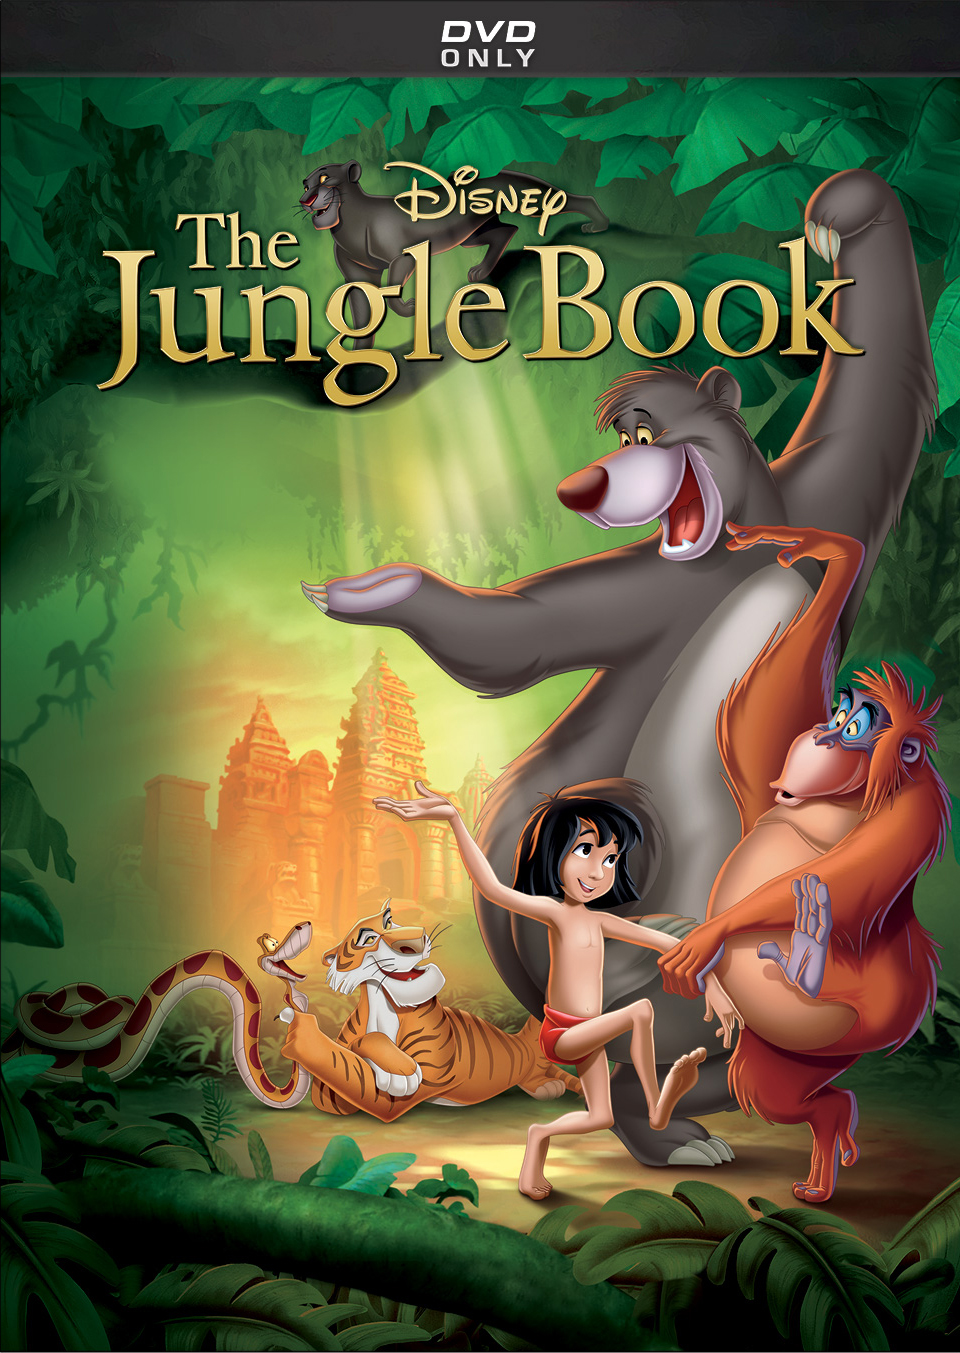 The Jungle Book [DVD] [1967] - Best Buy